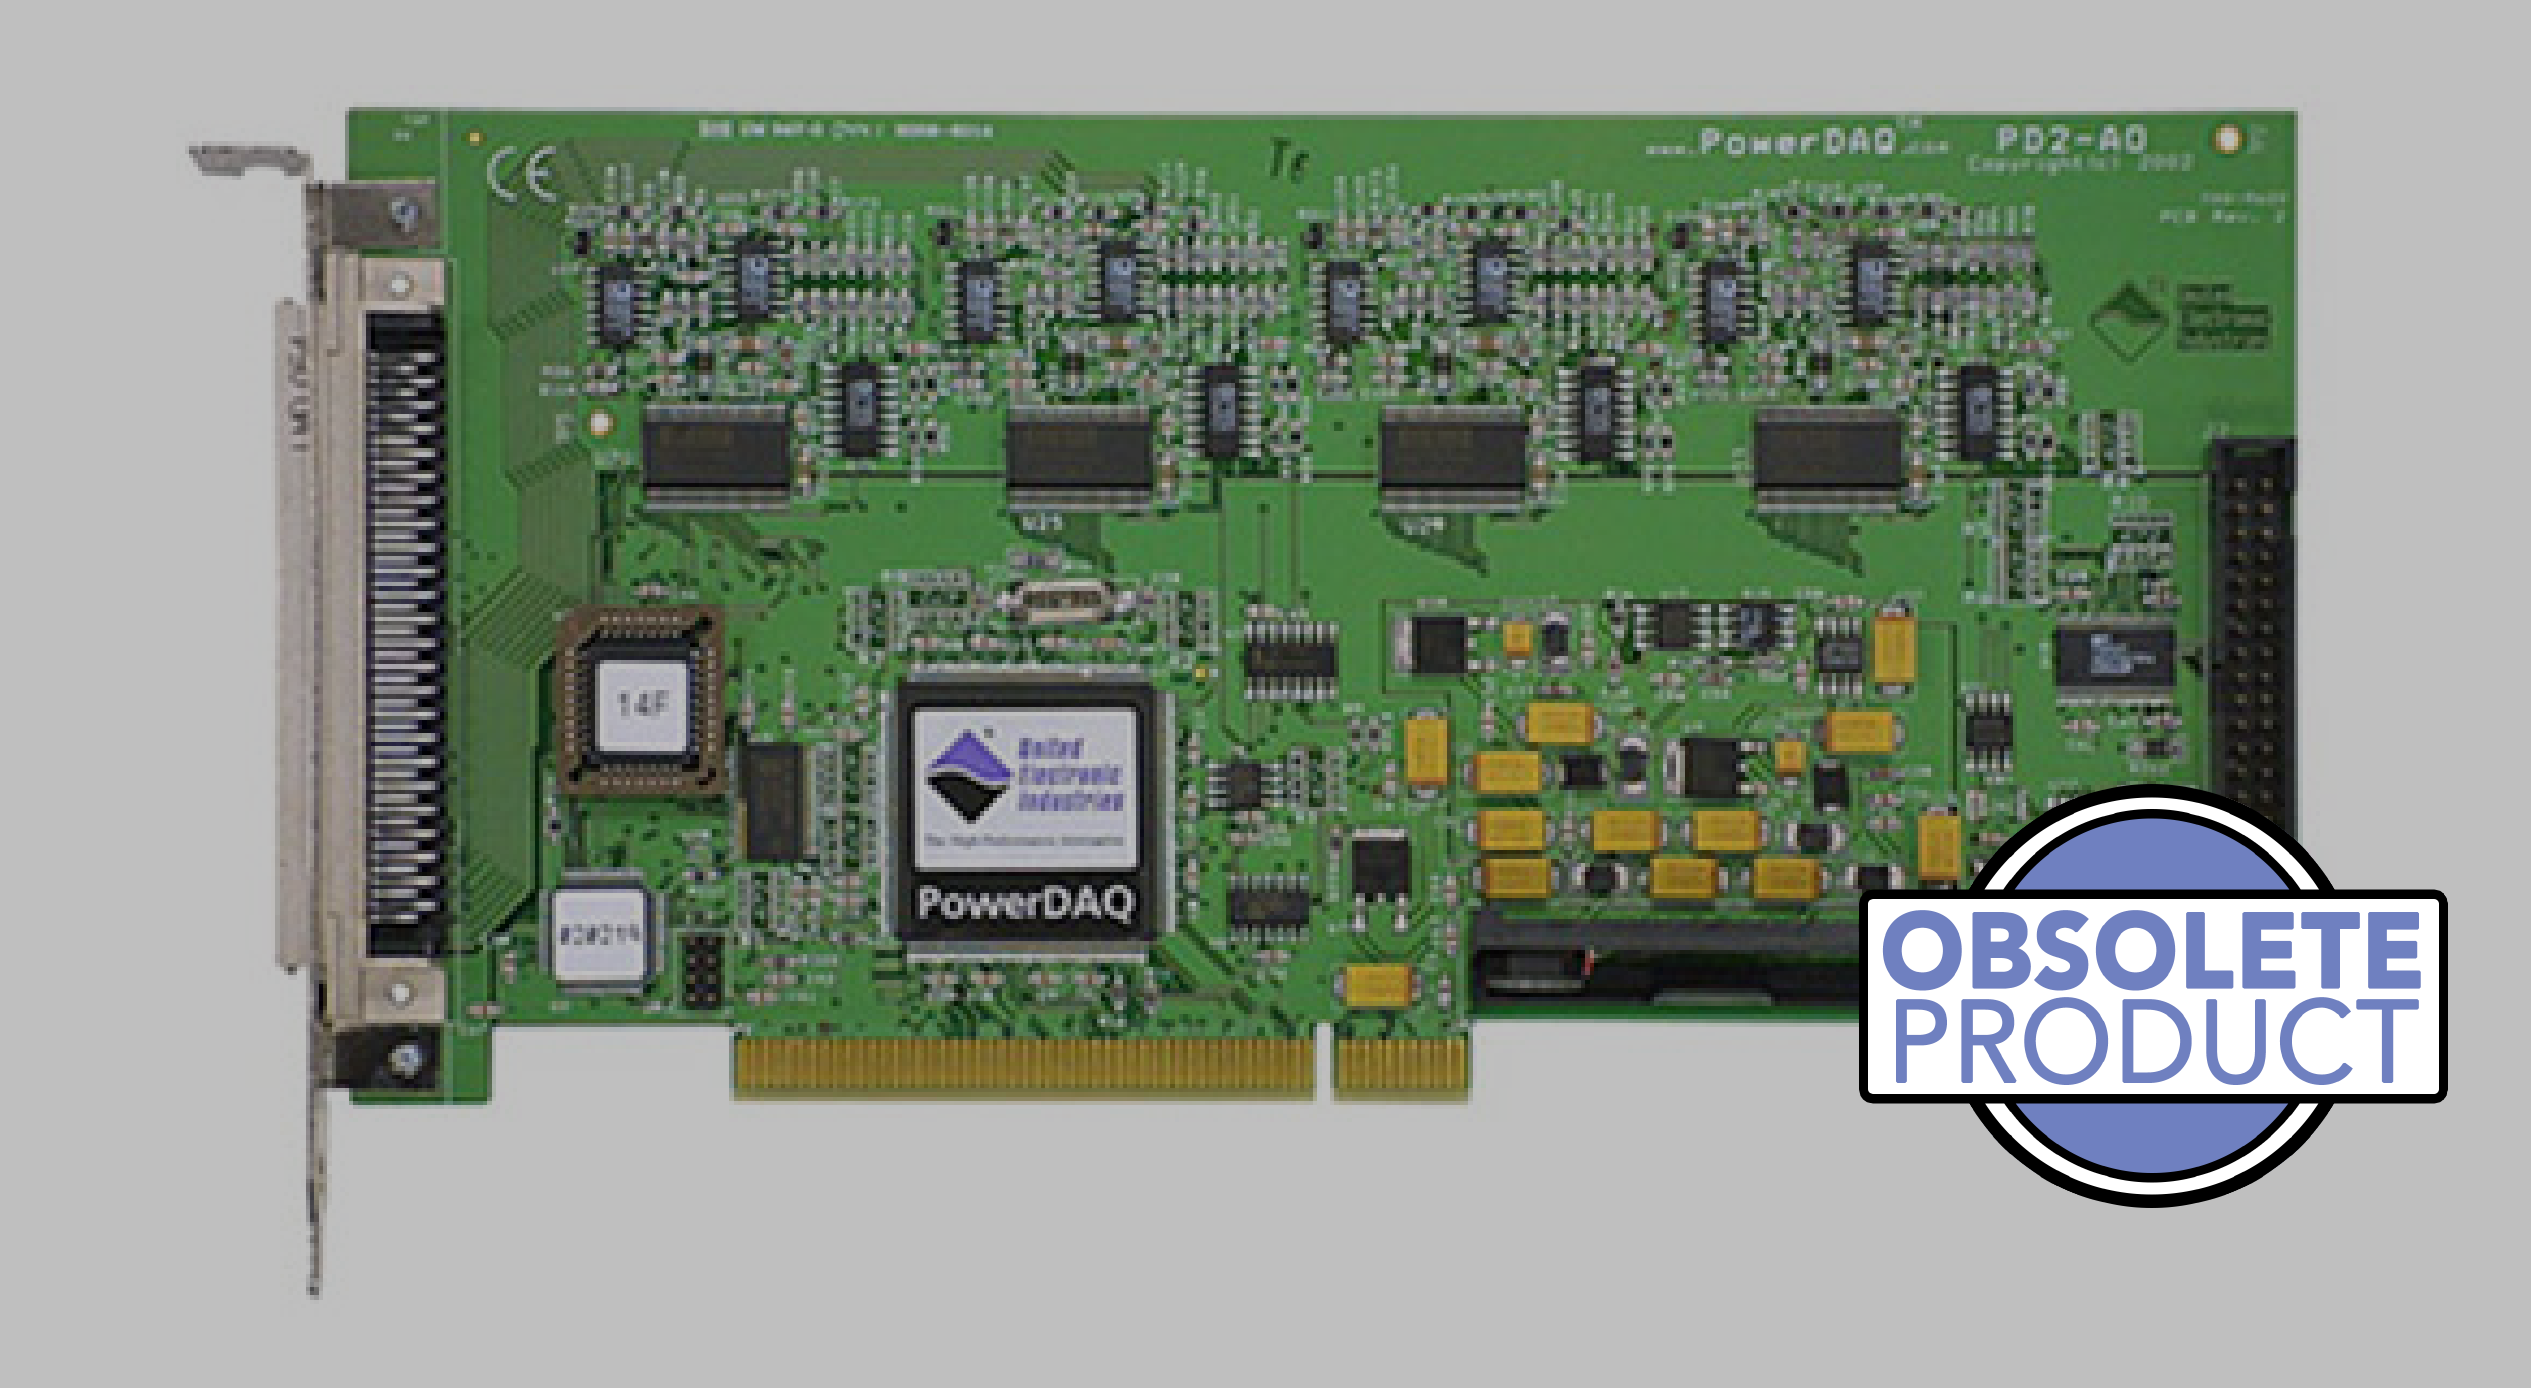 16-channel, 16-bit, 100 kS/s per channel PCI analog output board